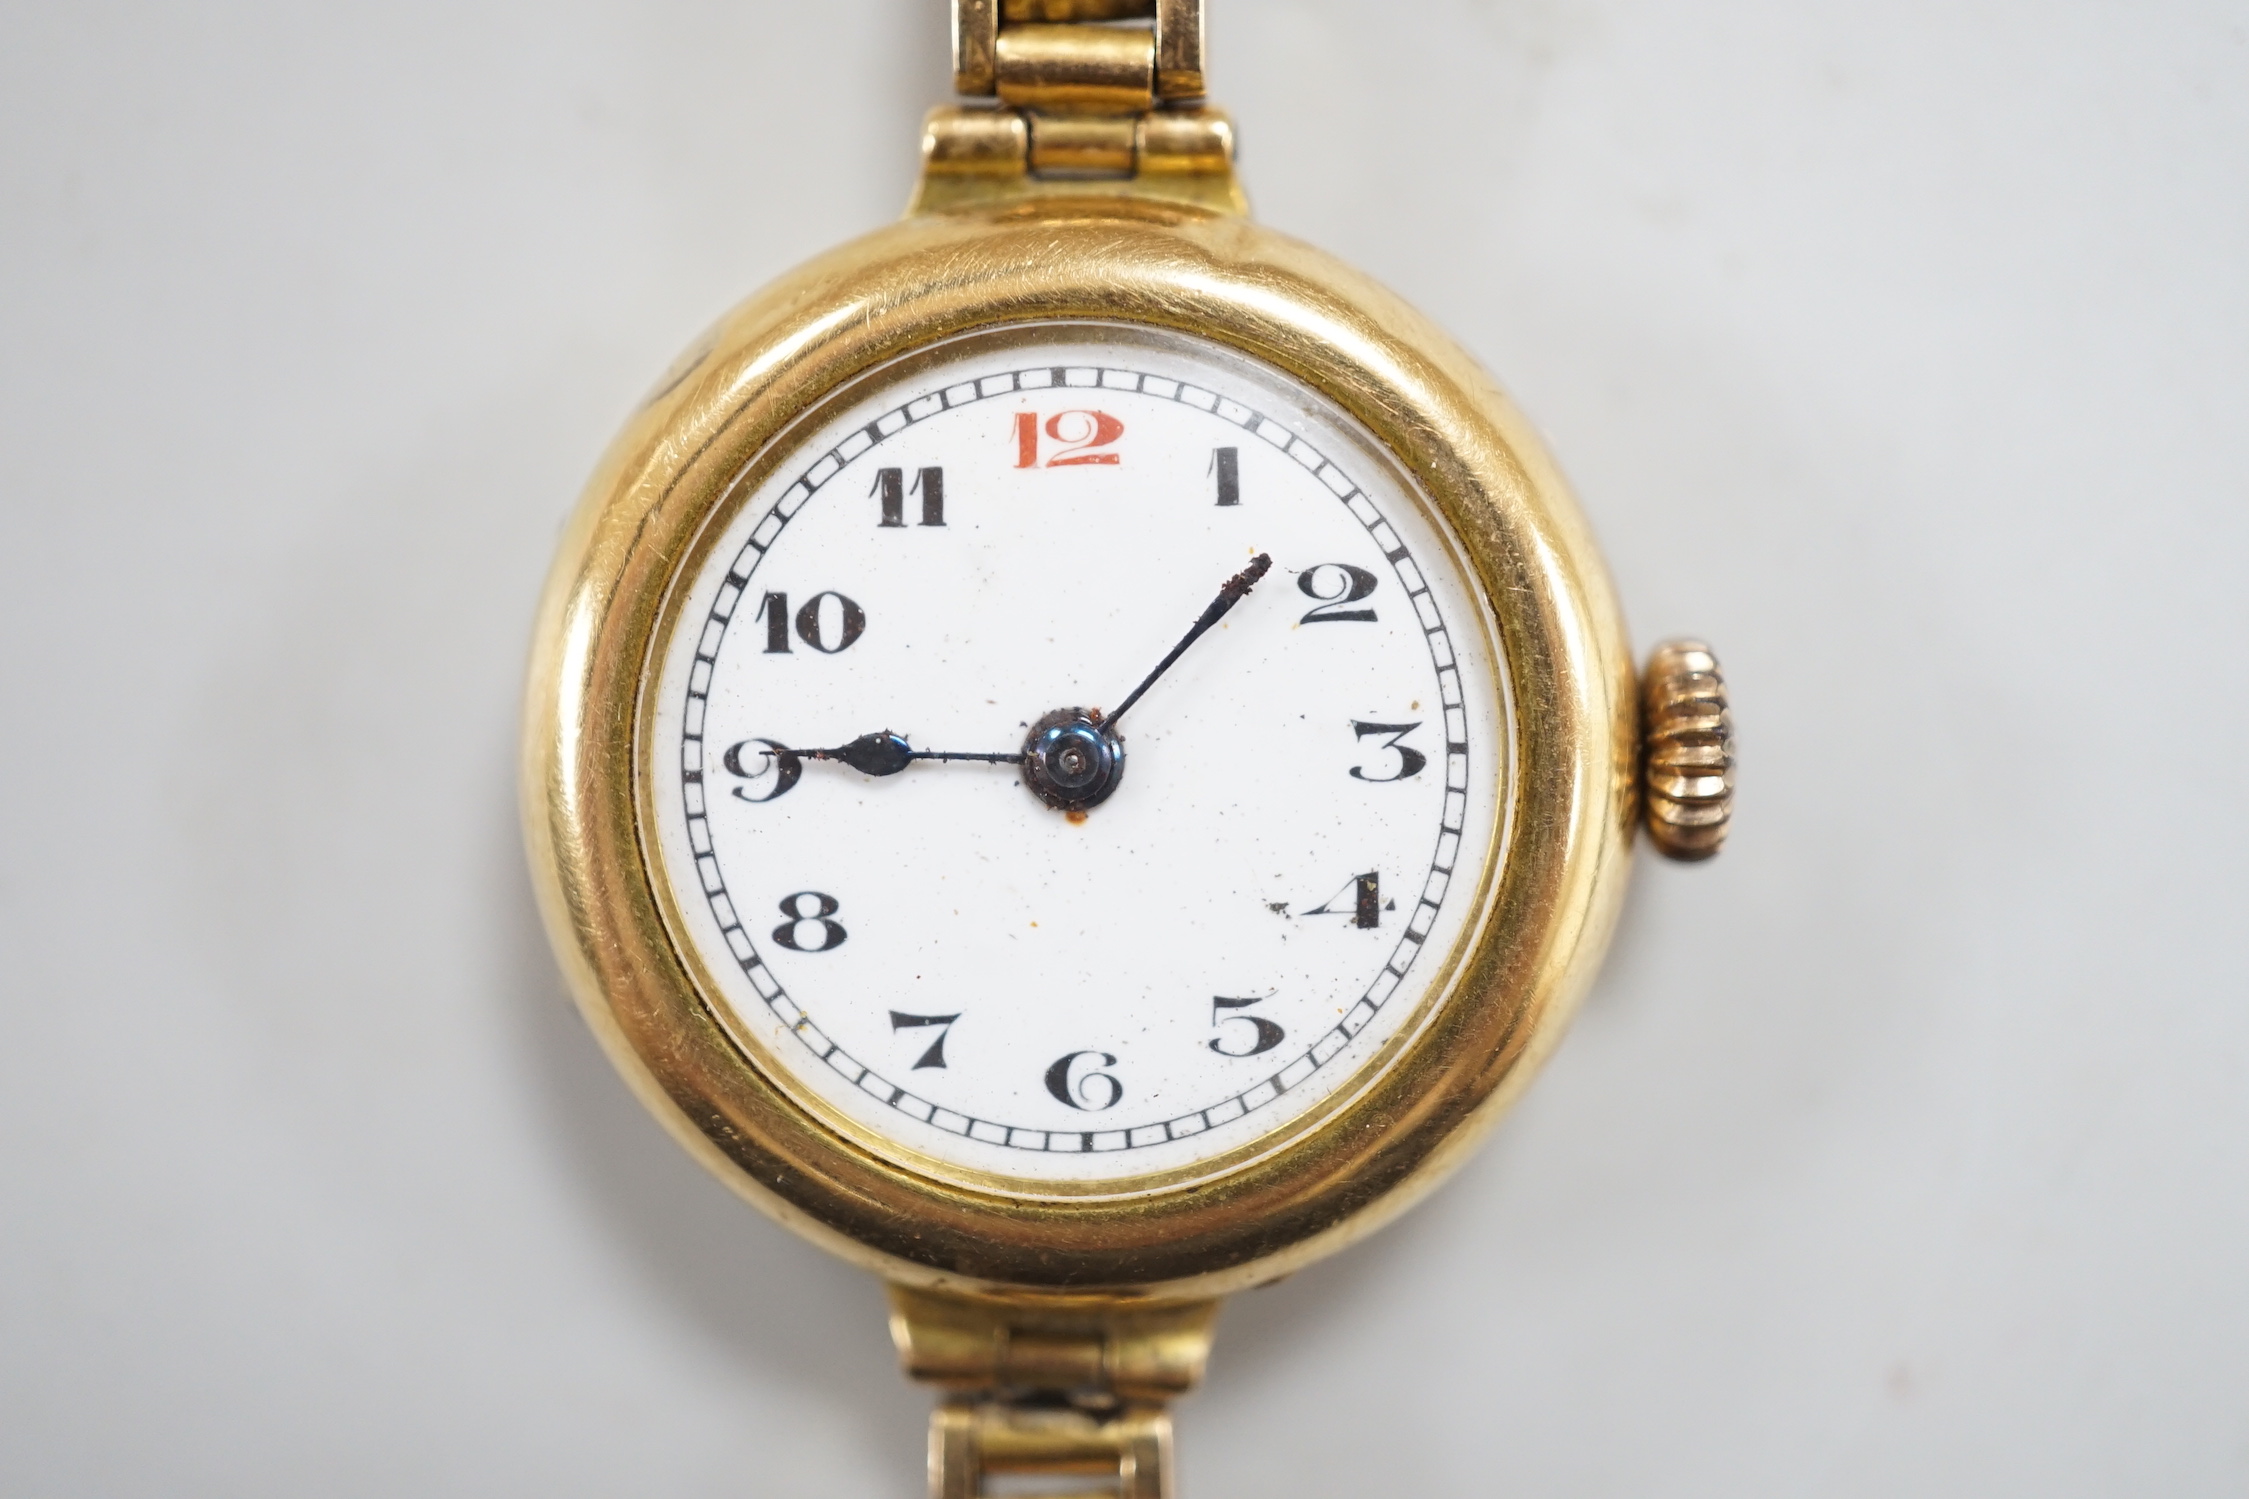 An early 20th century 18ct gold manual wind wrist watch, on an 18ct flexible bracelet, case diameter 25mm, gross weight 25.9 grams.